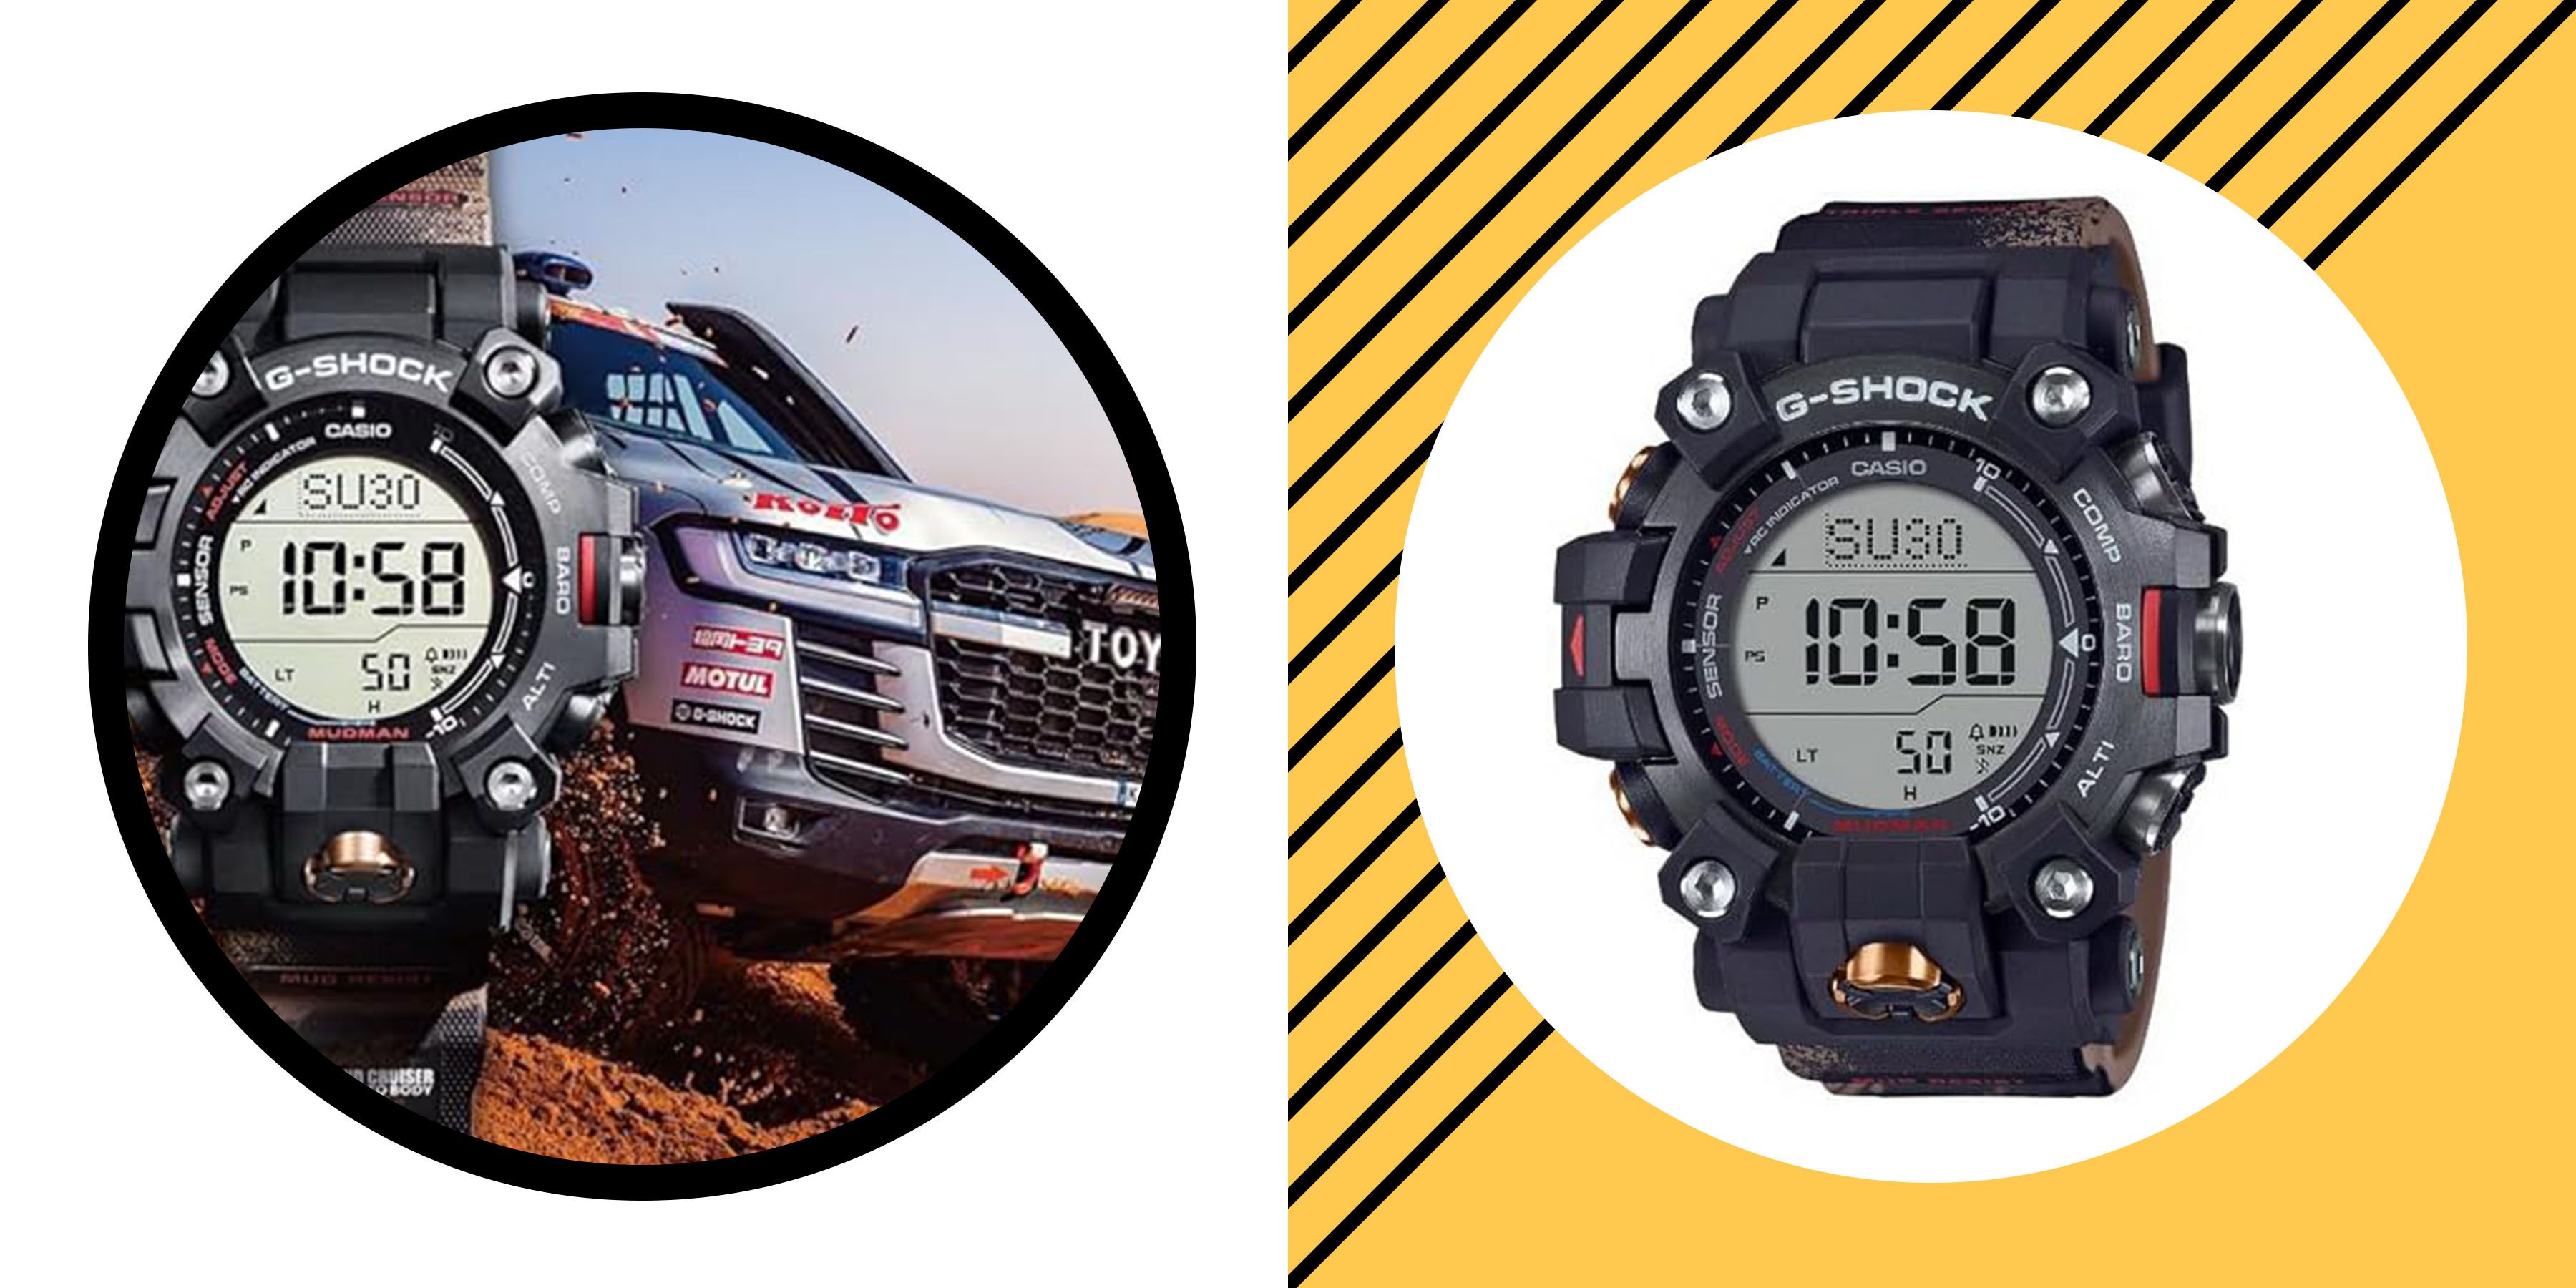 Toyota Land Cruiser Diehards Need This Special-Edition G-Shock Watch